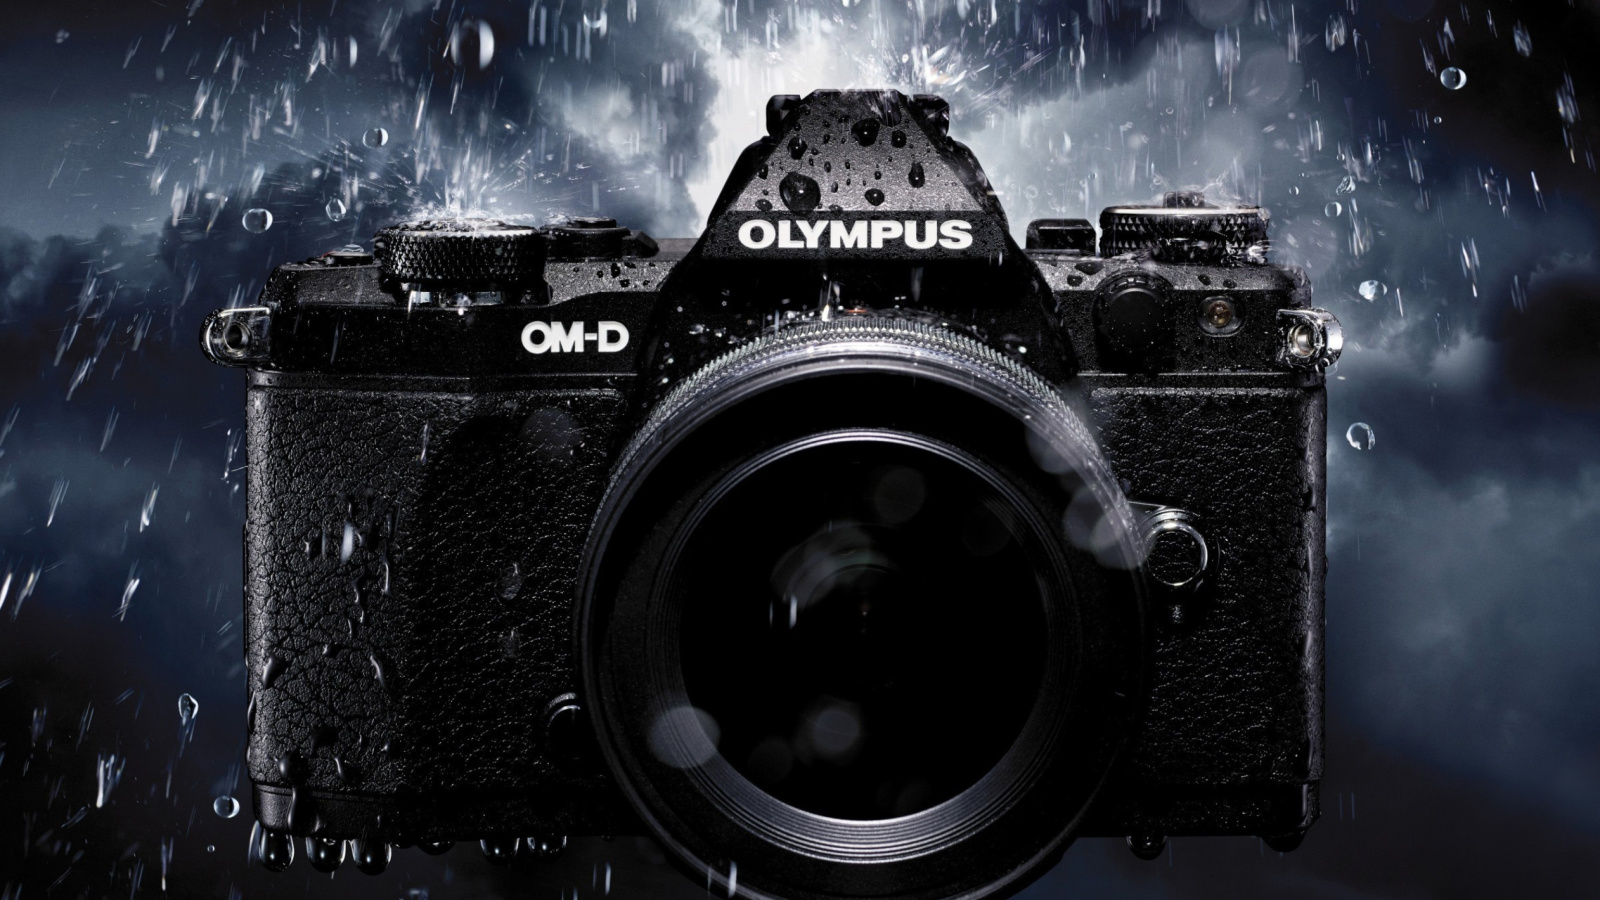 Olympus Om D wallpaper 1600x900